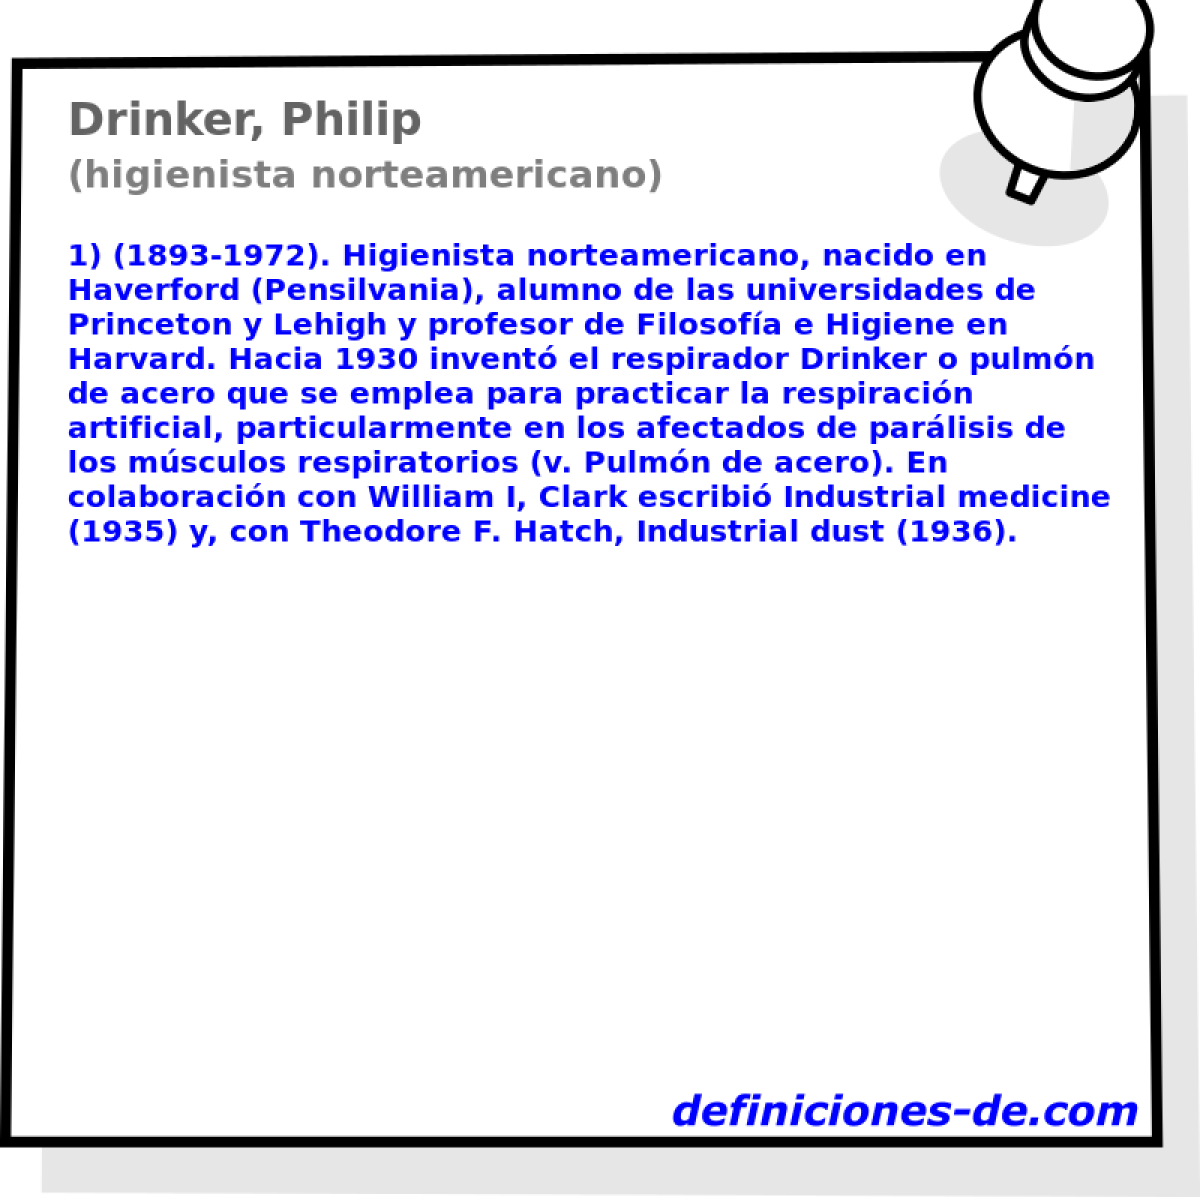 Drinker, Philip (higienista norteamericano)